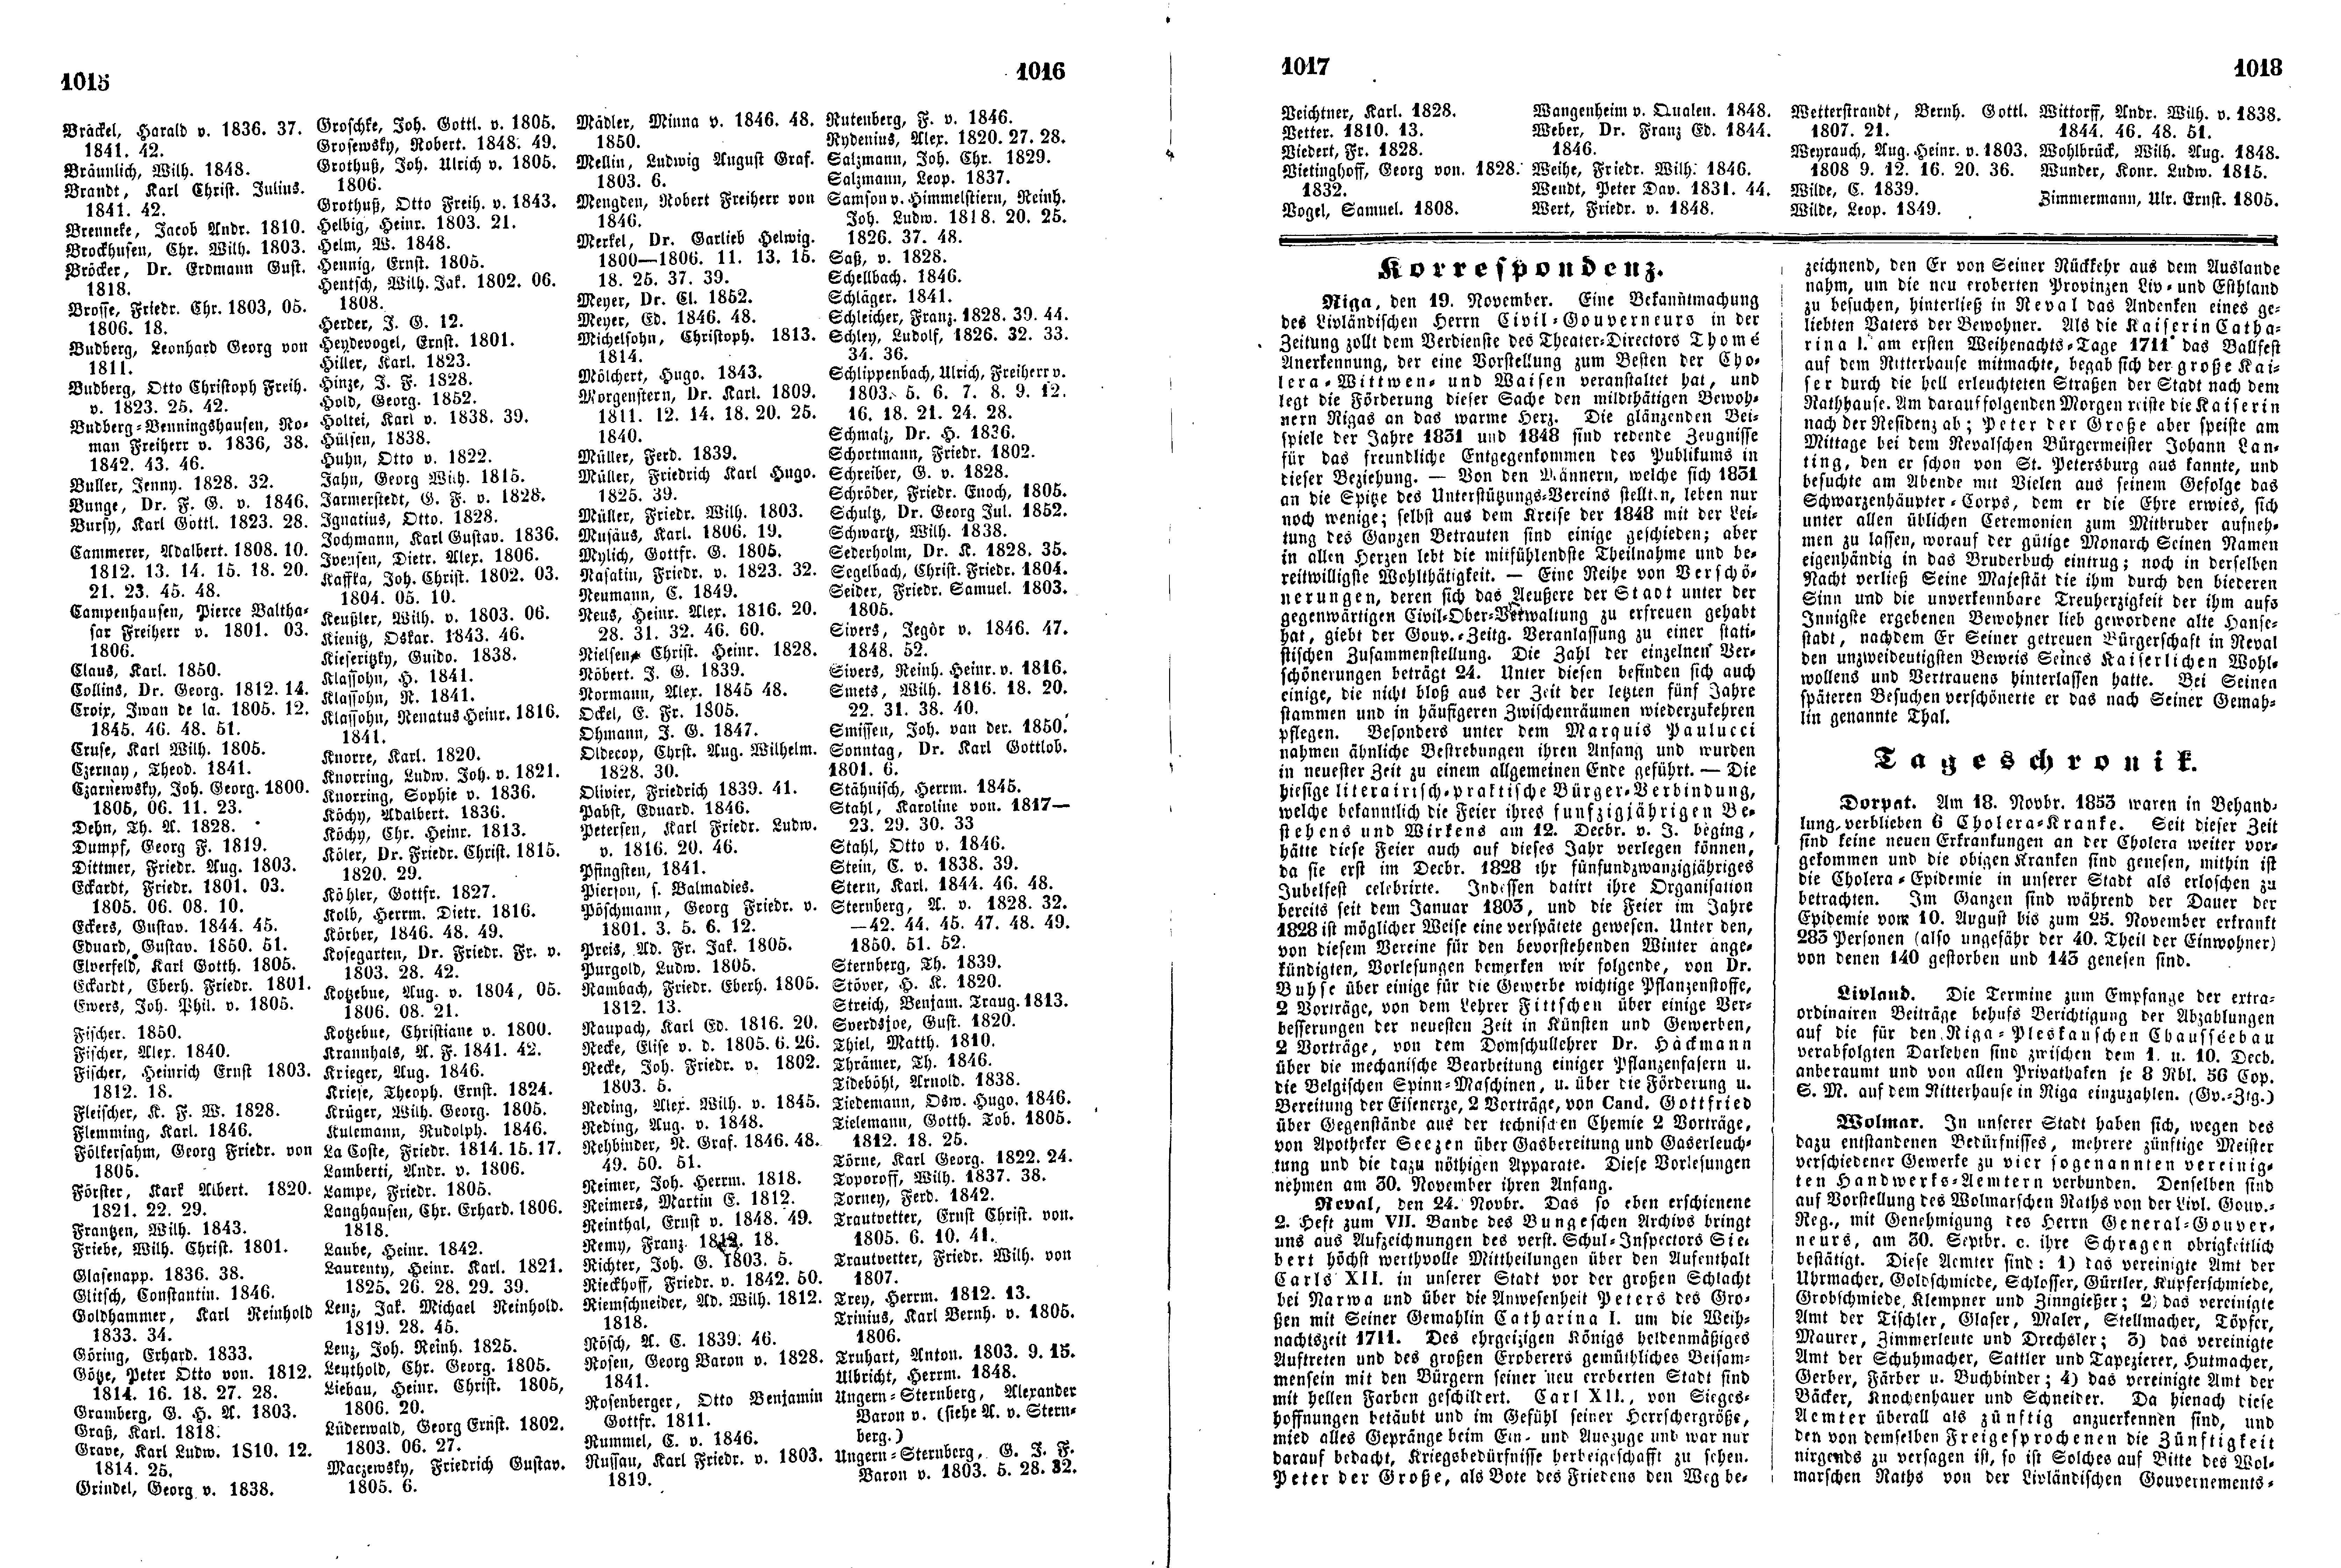 Das Inland [18] (1853) | 264. (1015-1018) Main body of text